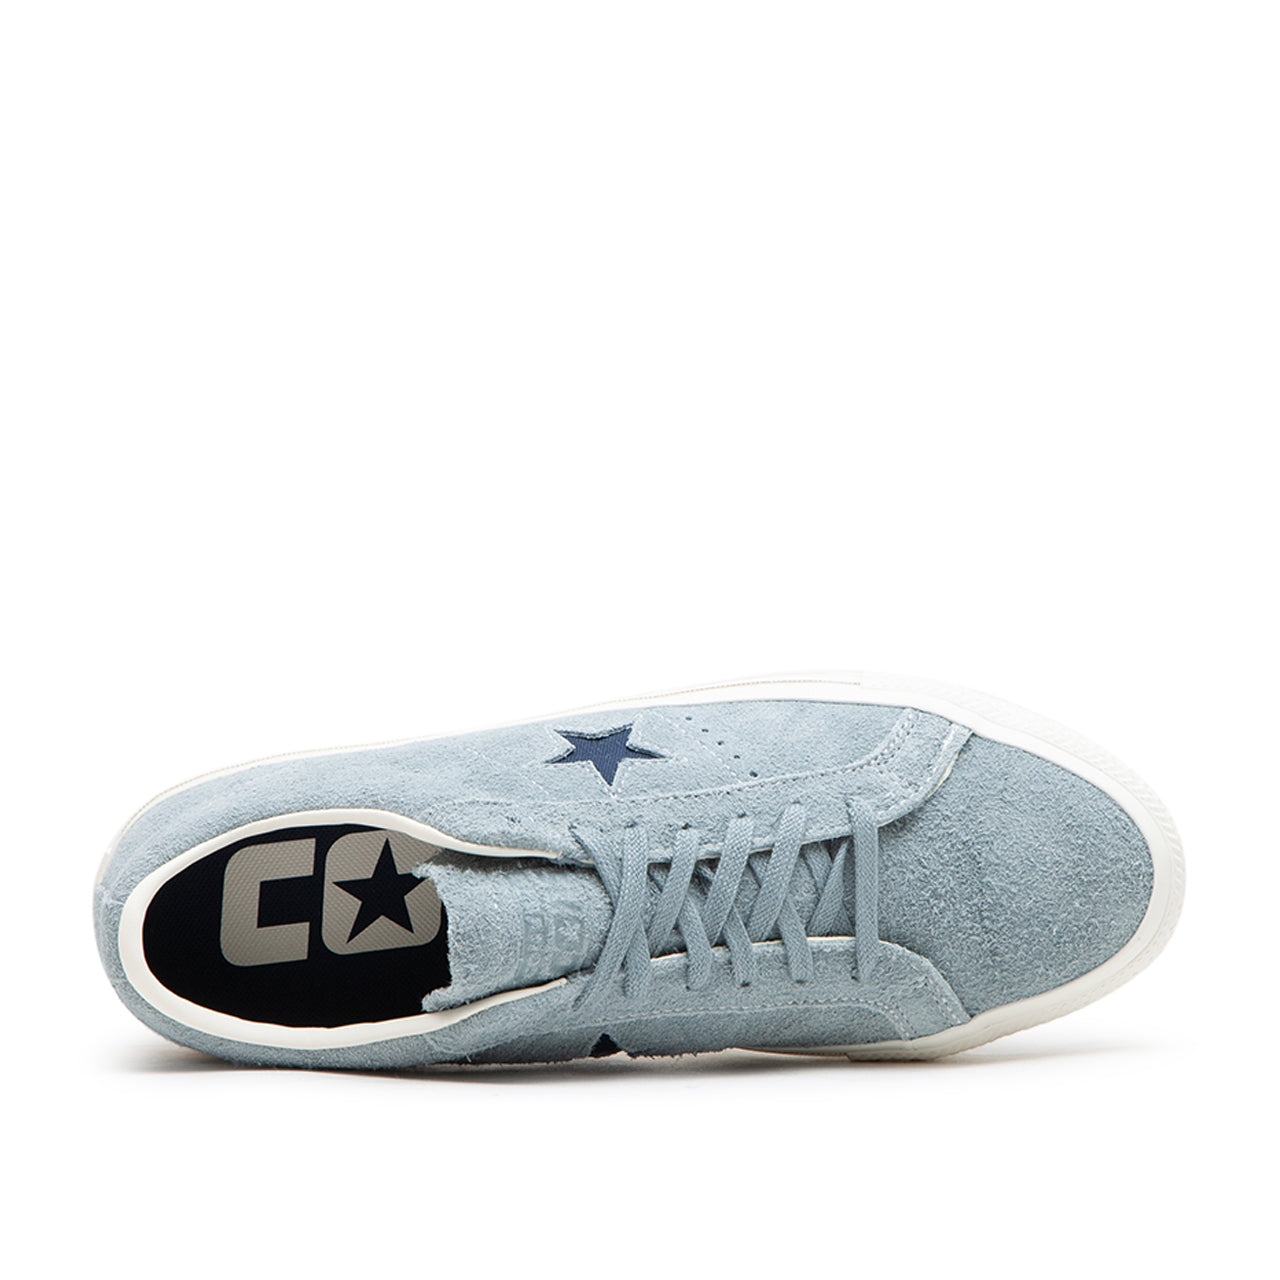 converse Puma One Star Pro Vintage Suede (Blau / Weiß)  - Cheap Cerbe Jordan Outlet